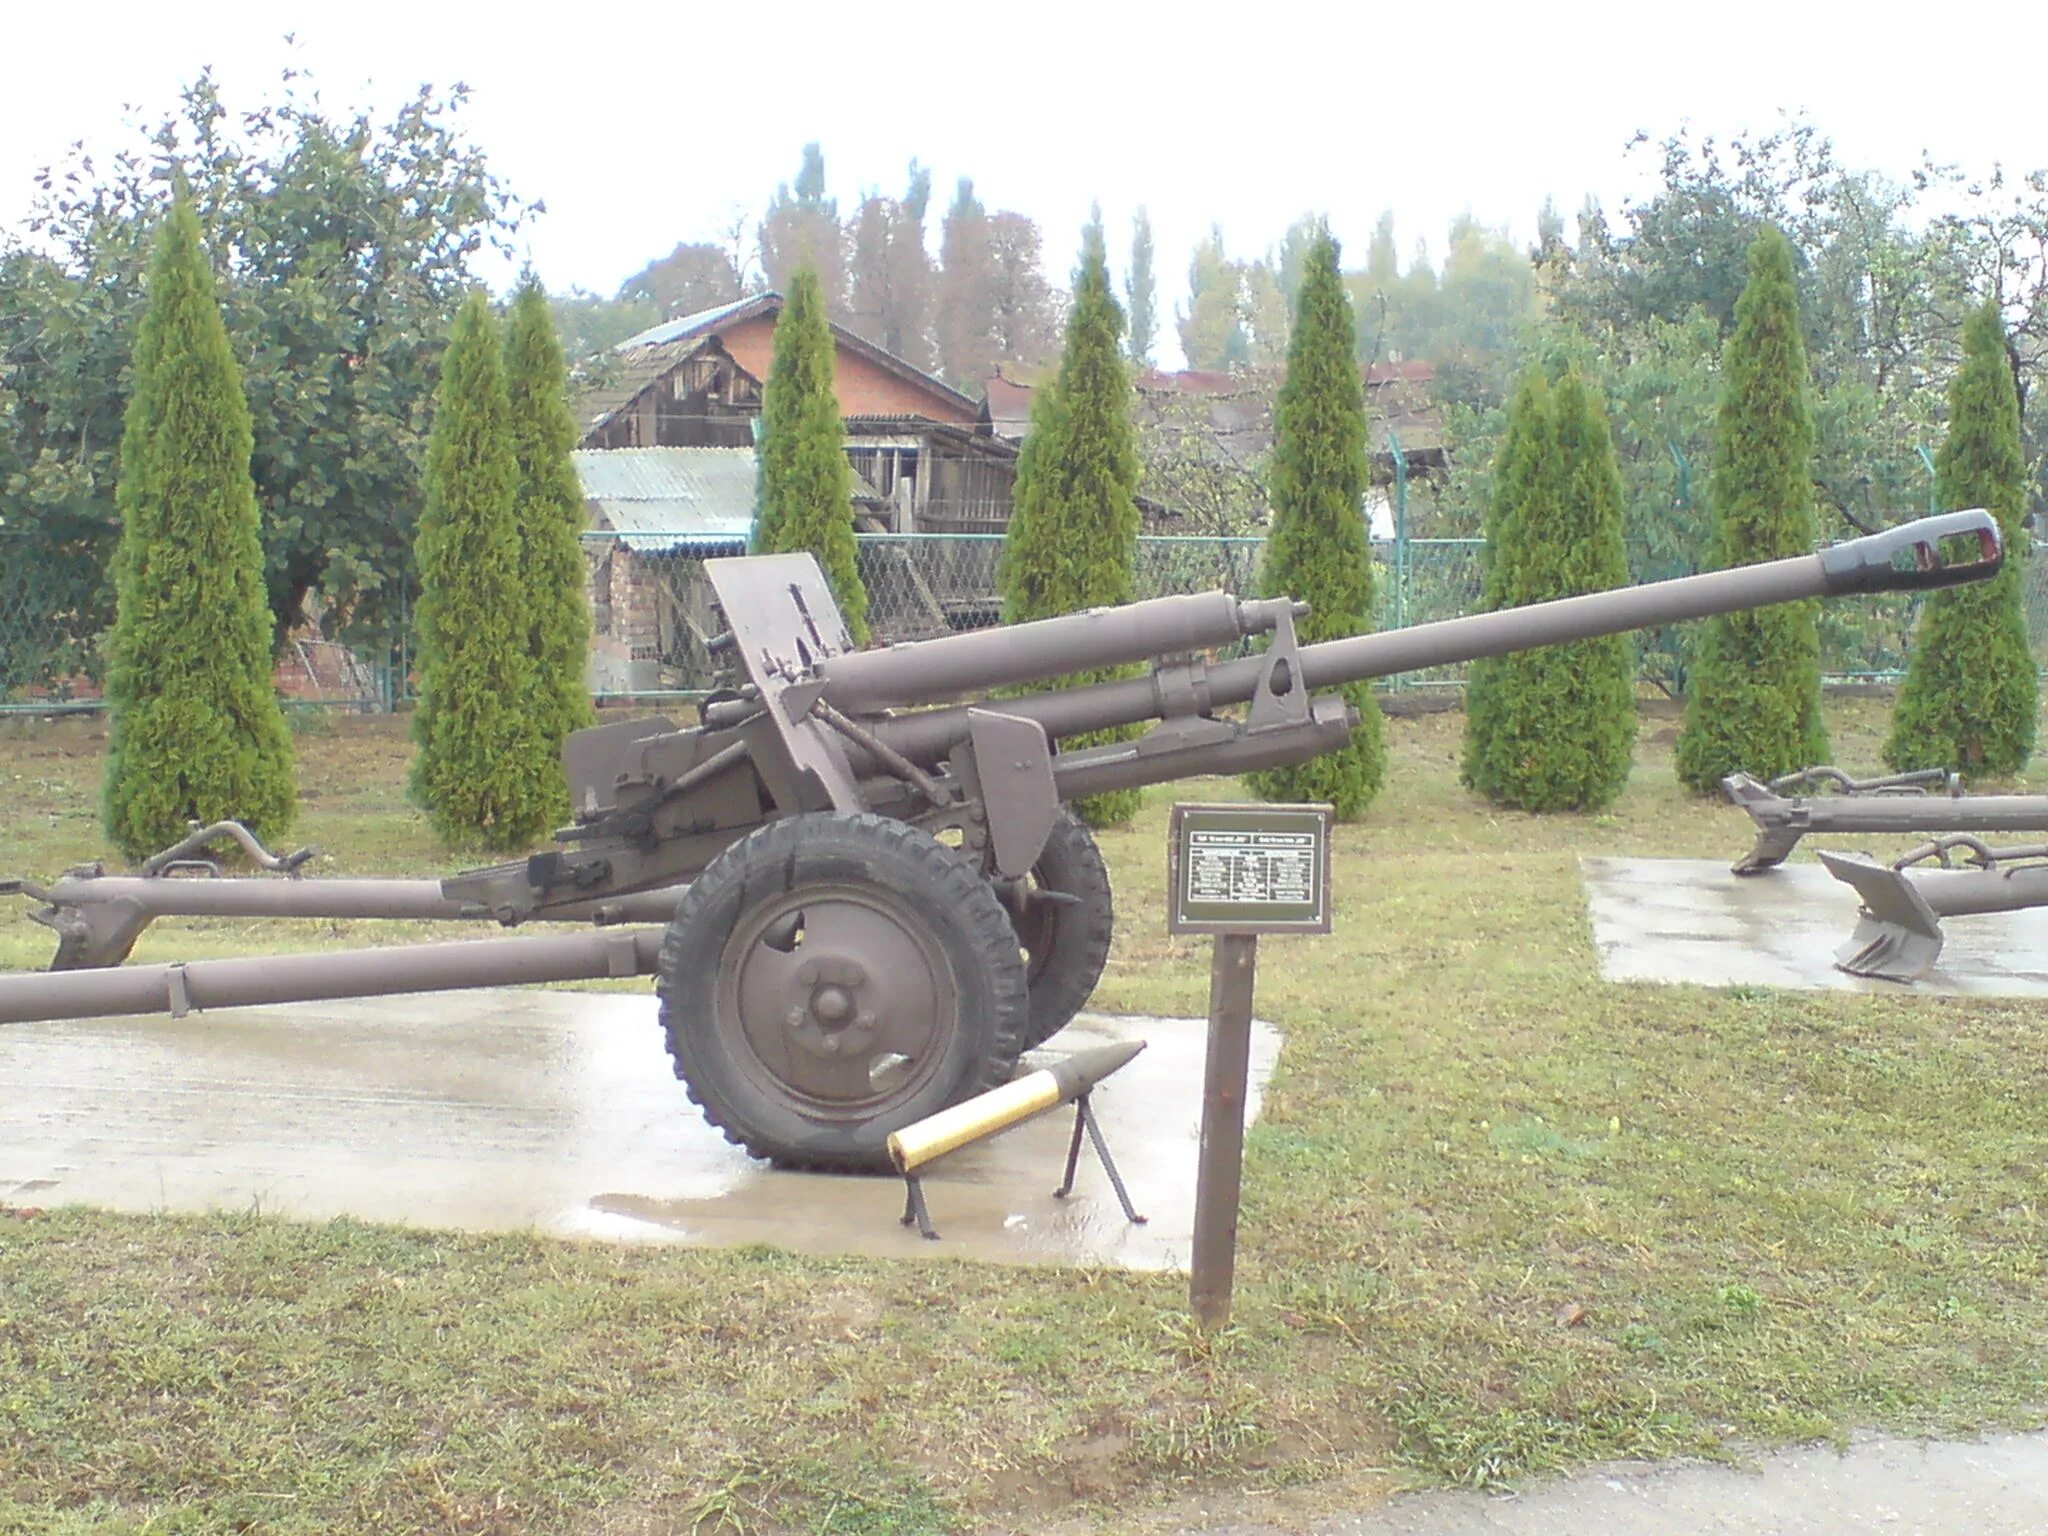 76-Мм дивизионная пушка ЗИС-3. Пушка противотанковая 76.2мм ЗИС-3. 76 Мм пушка Грабина. 76 Мм дивизионная пушка 1942 года.